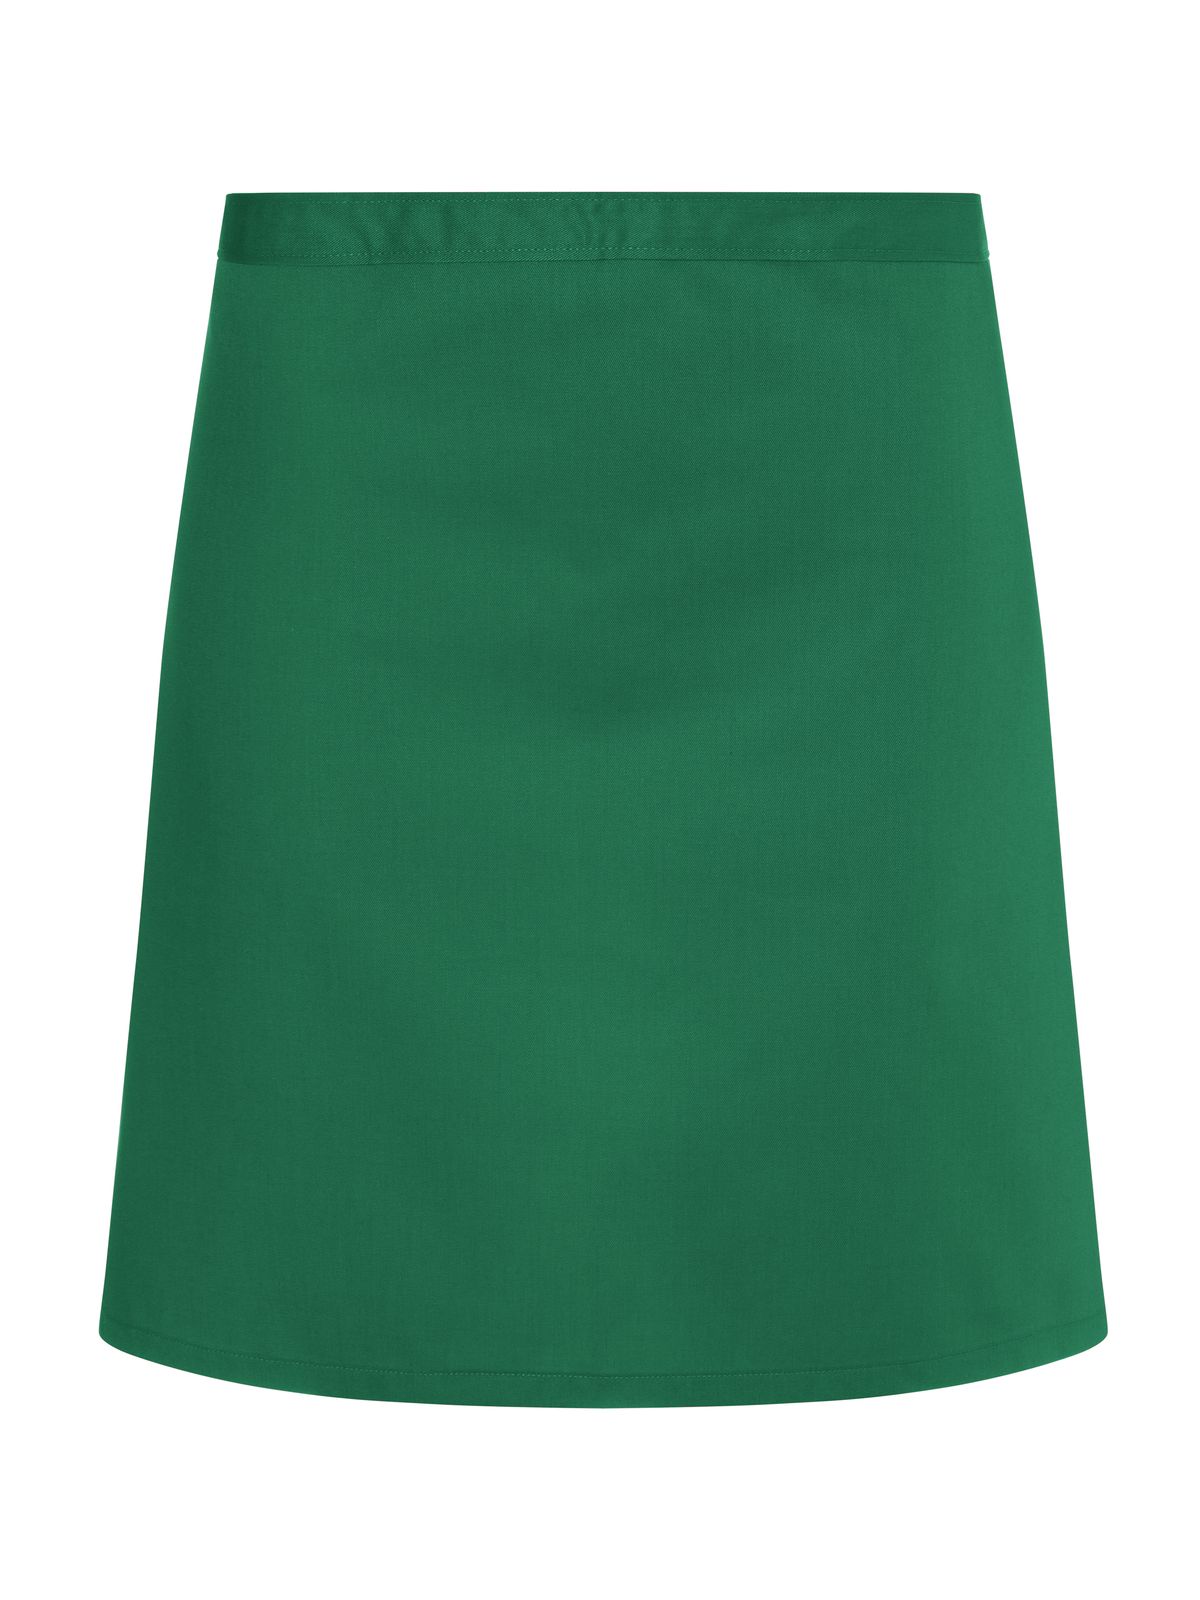 apron-basic-forest-green.webp